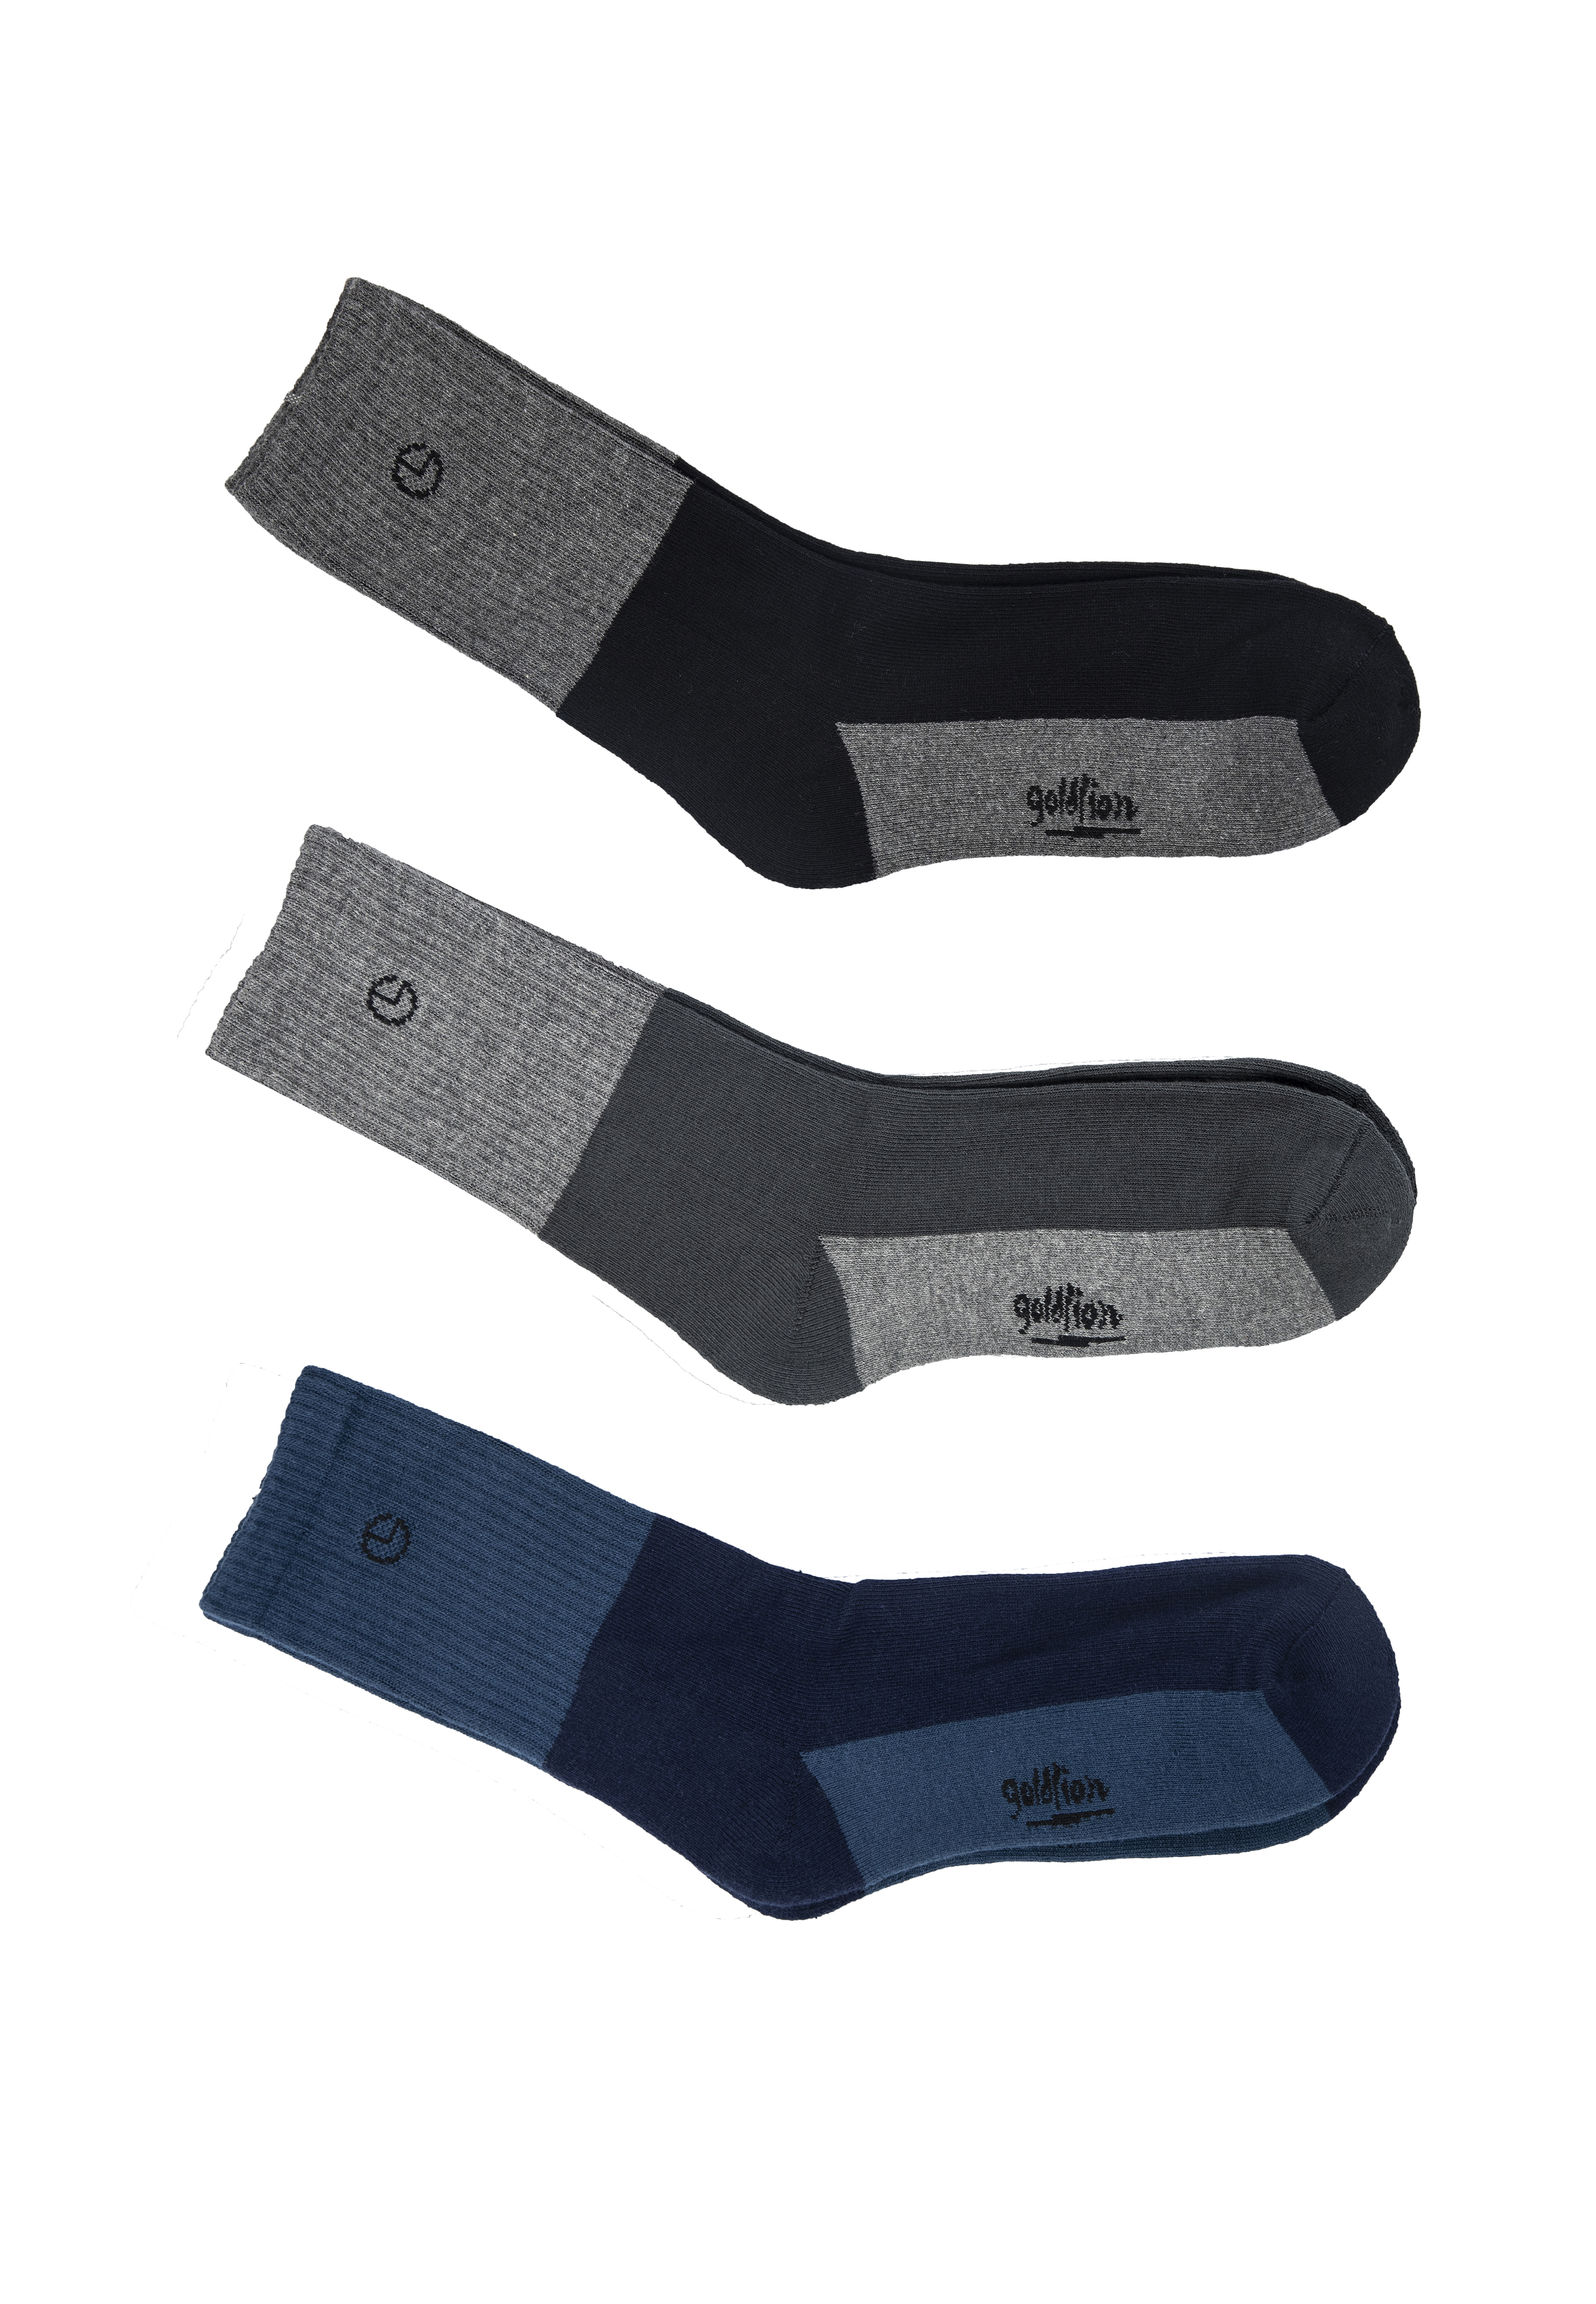 Goldlion Cotton Spandex Casual Full Length Socks (3-piece pack)